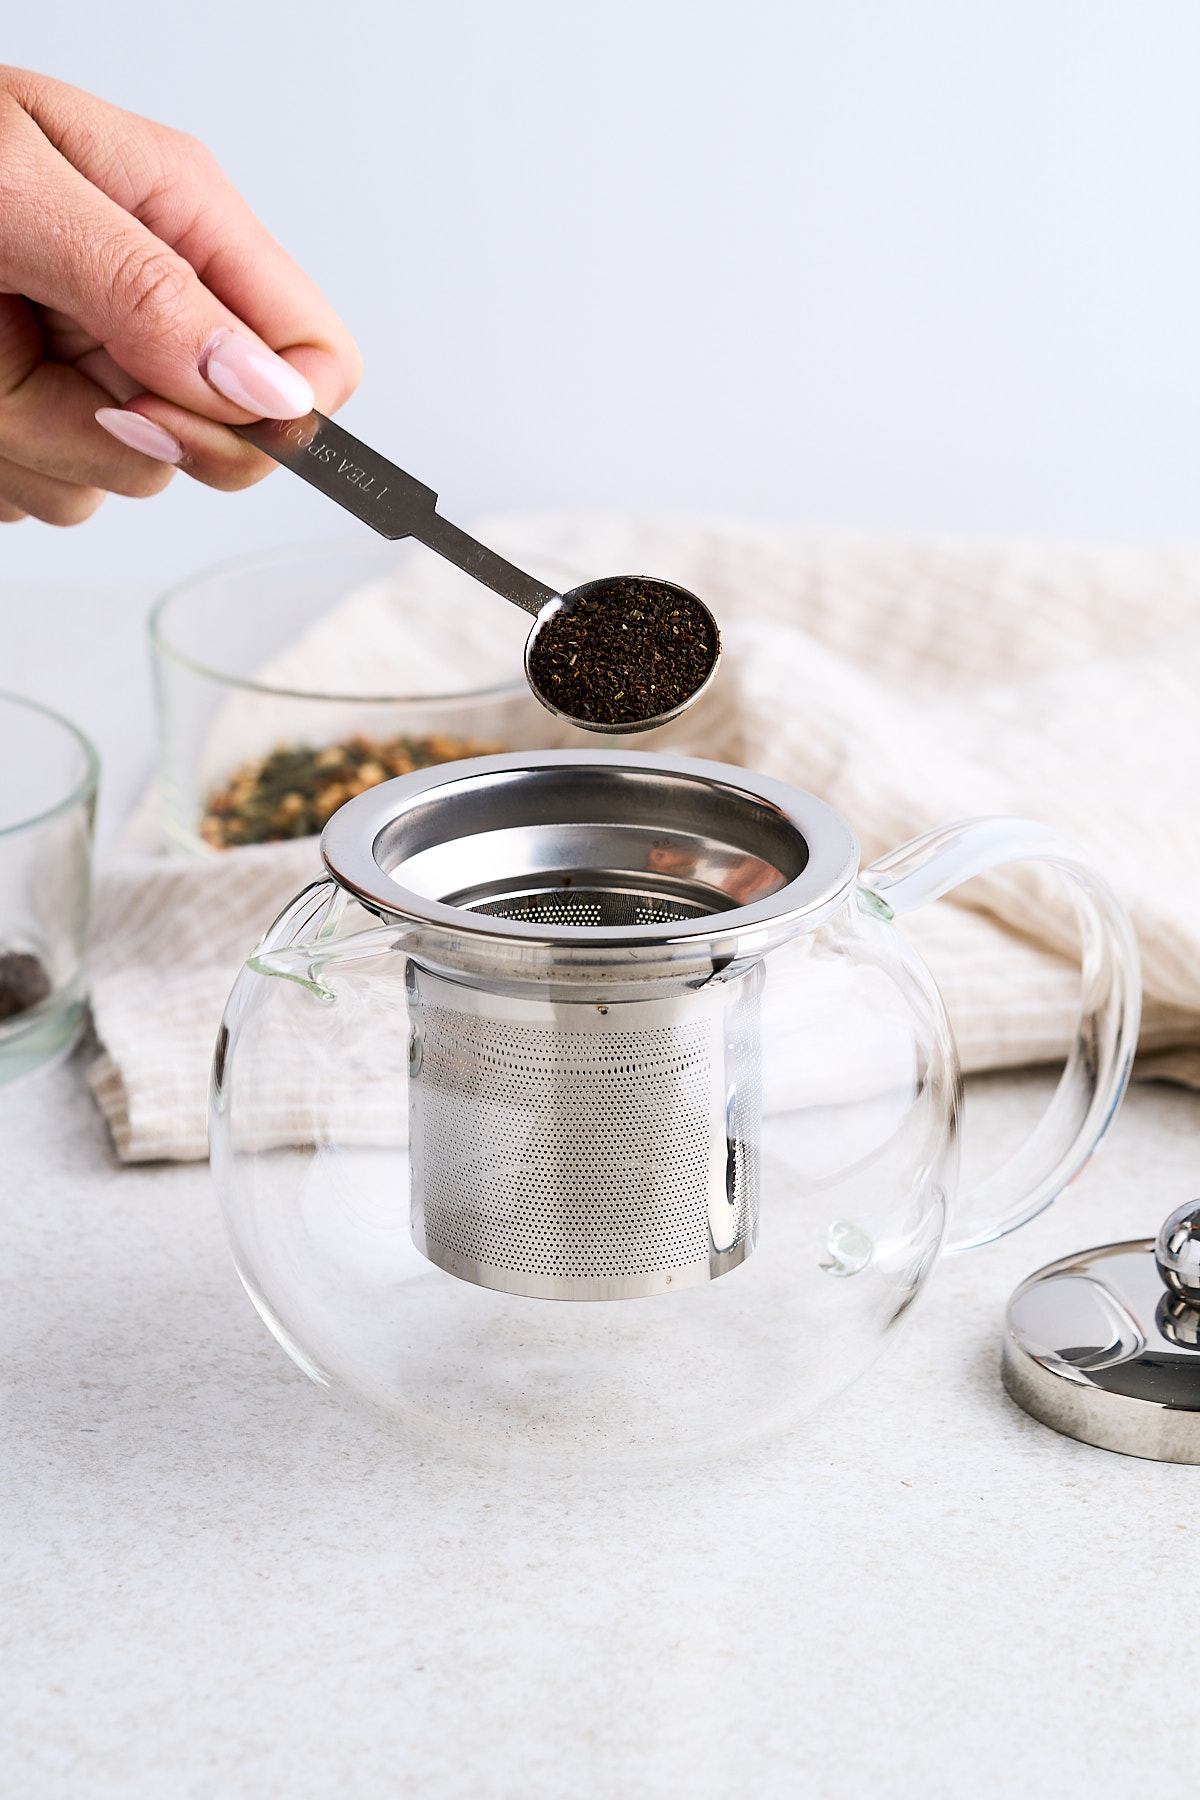 Adding tea to a glass tea pot.